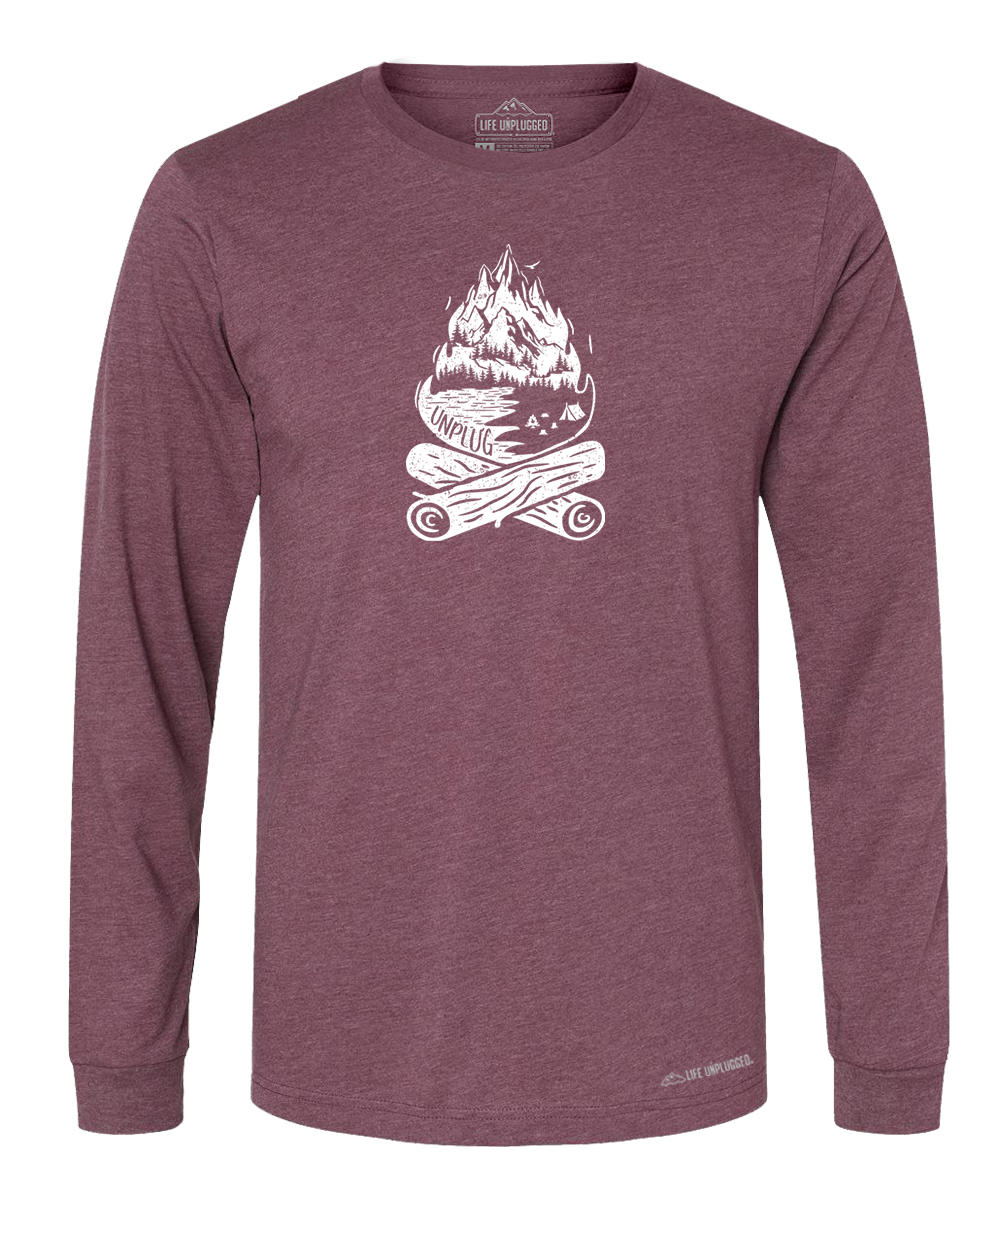 Campfire Mountain scene Premium Polyblend Long Sleeve T-Shirt - Life Unplugged